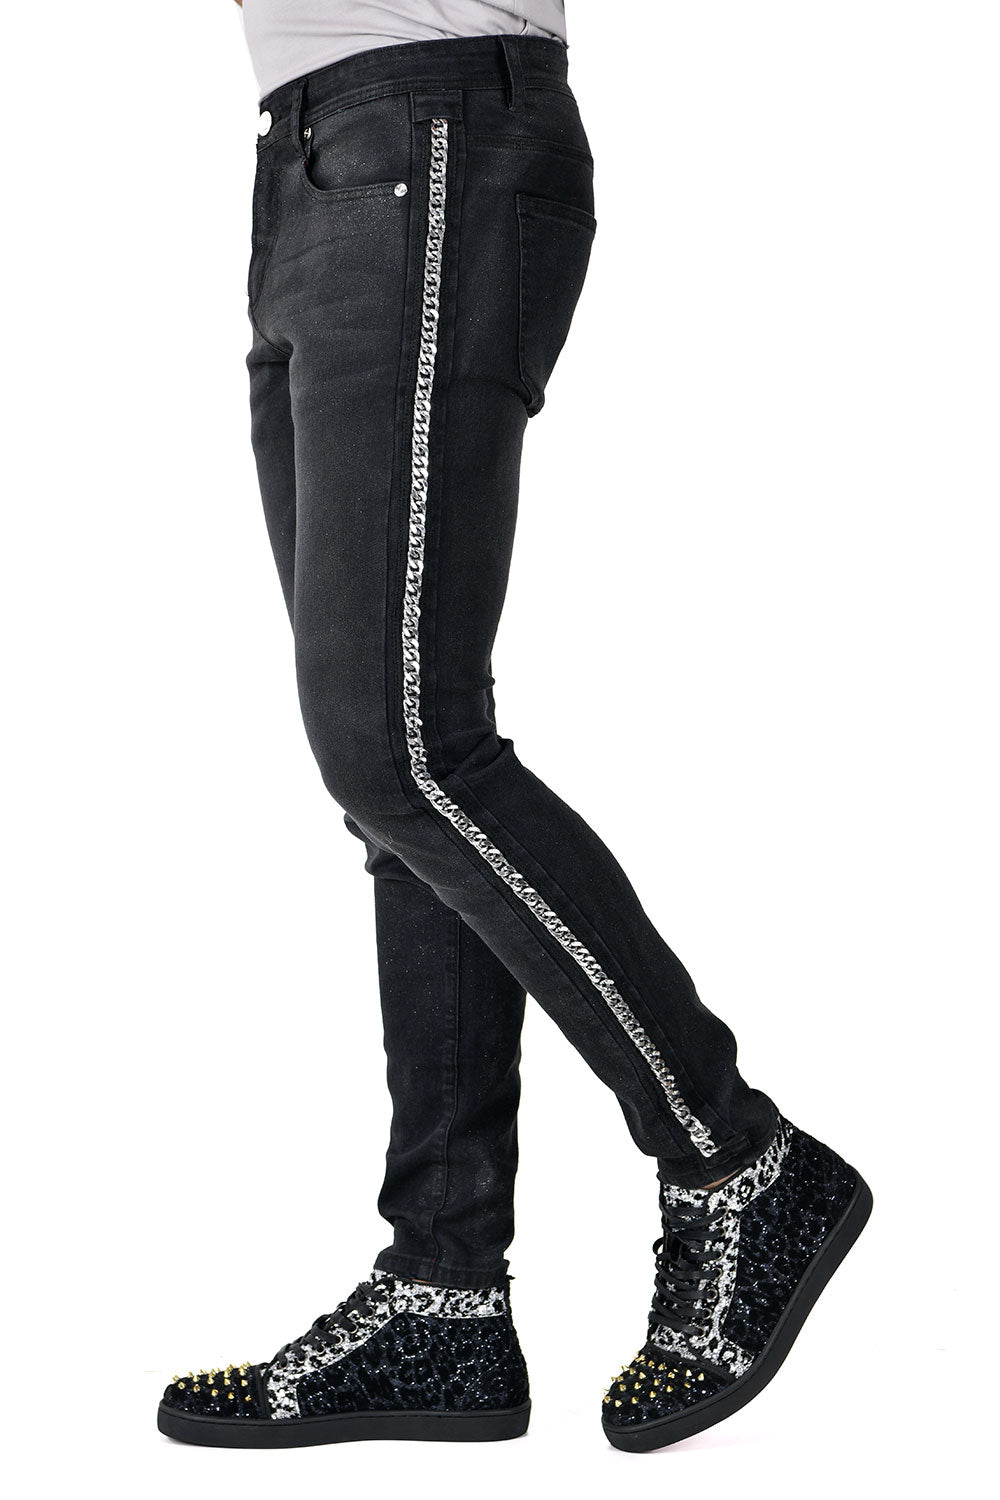 BARABAS Men's Sparkly Glittery Chain Design Denim Jeans SN8855 Black Silver